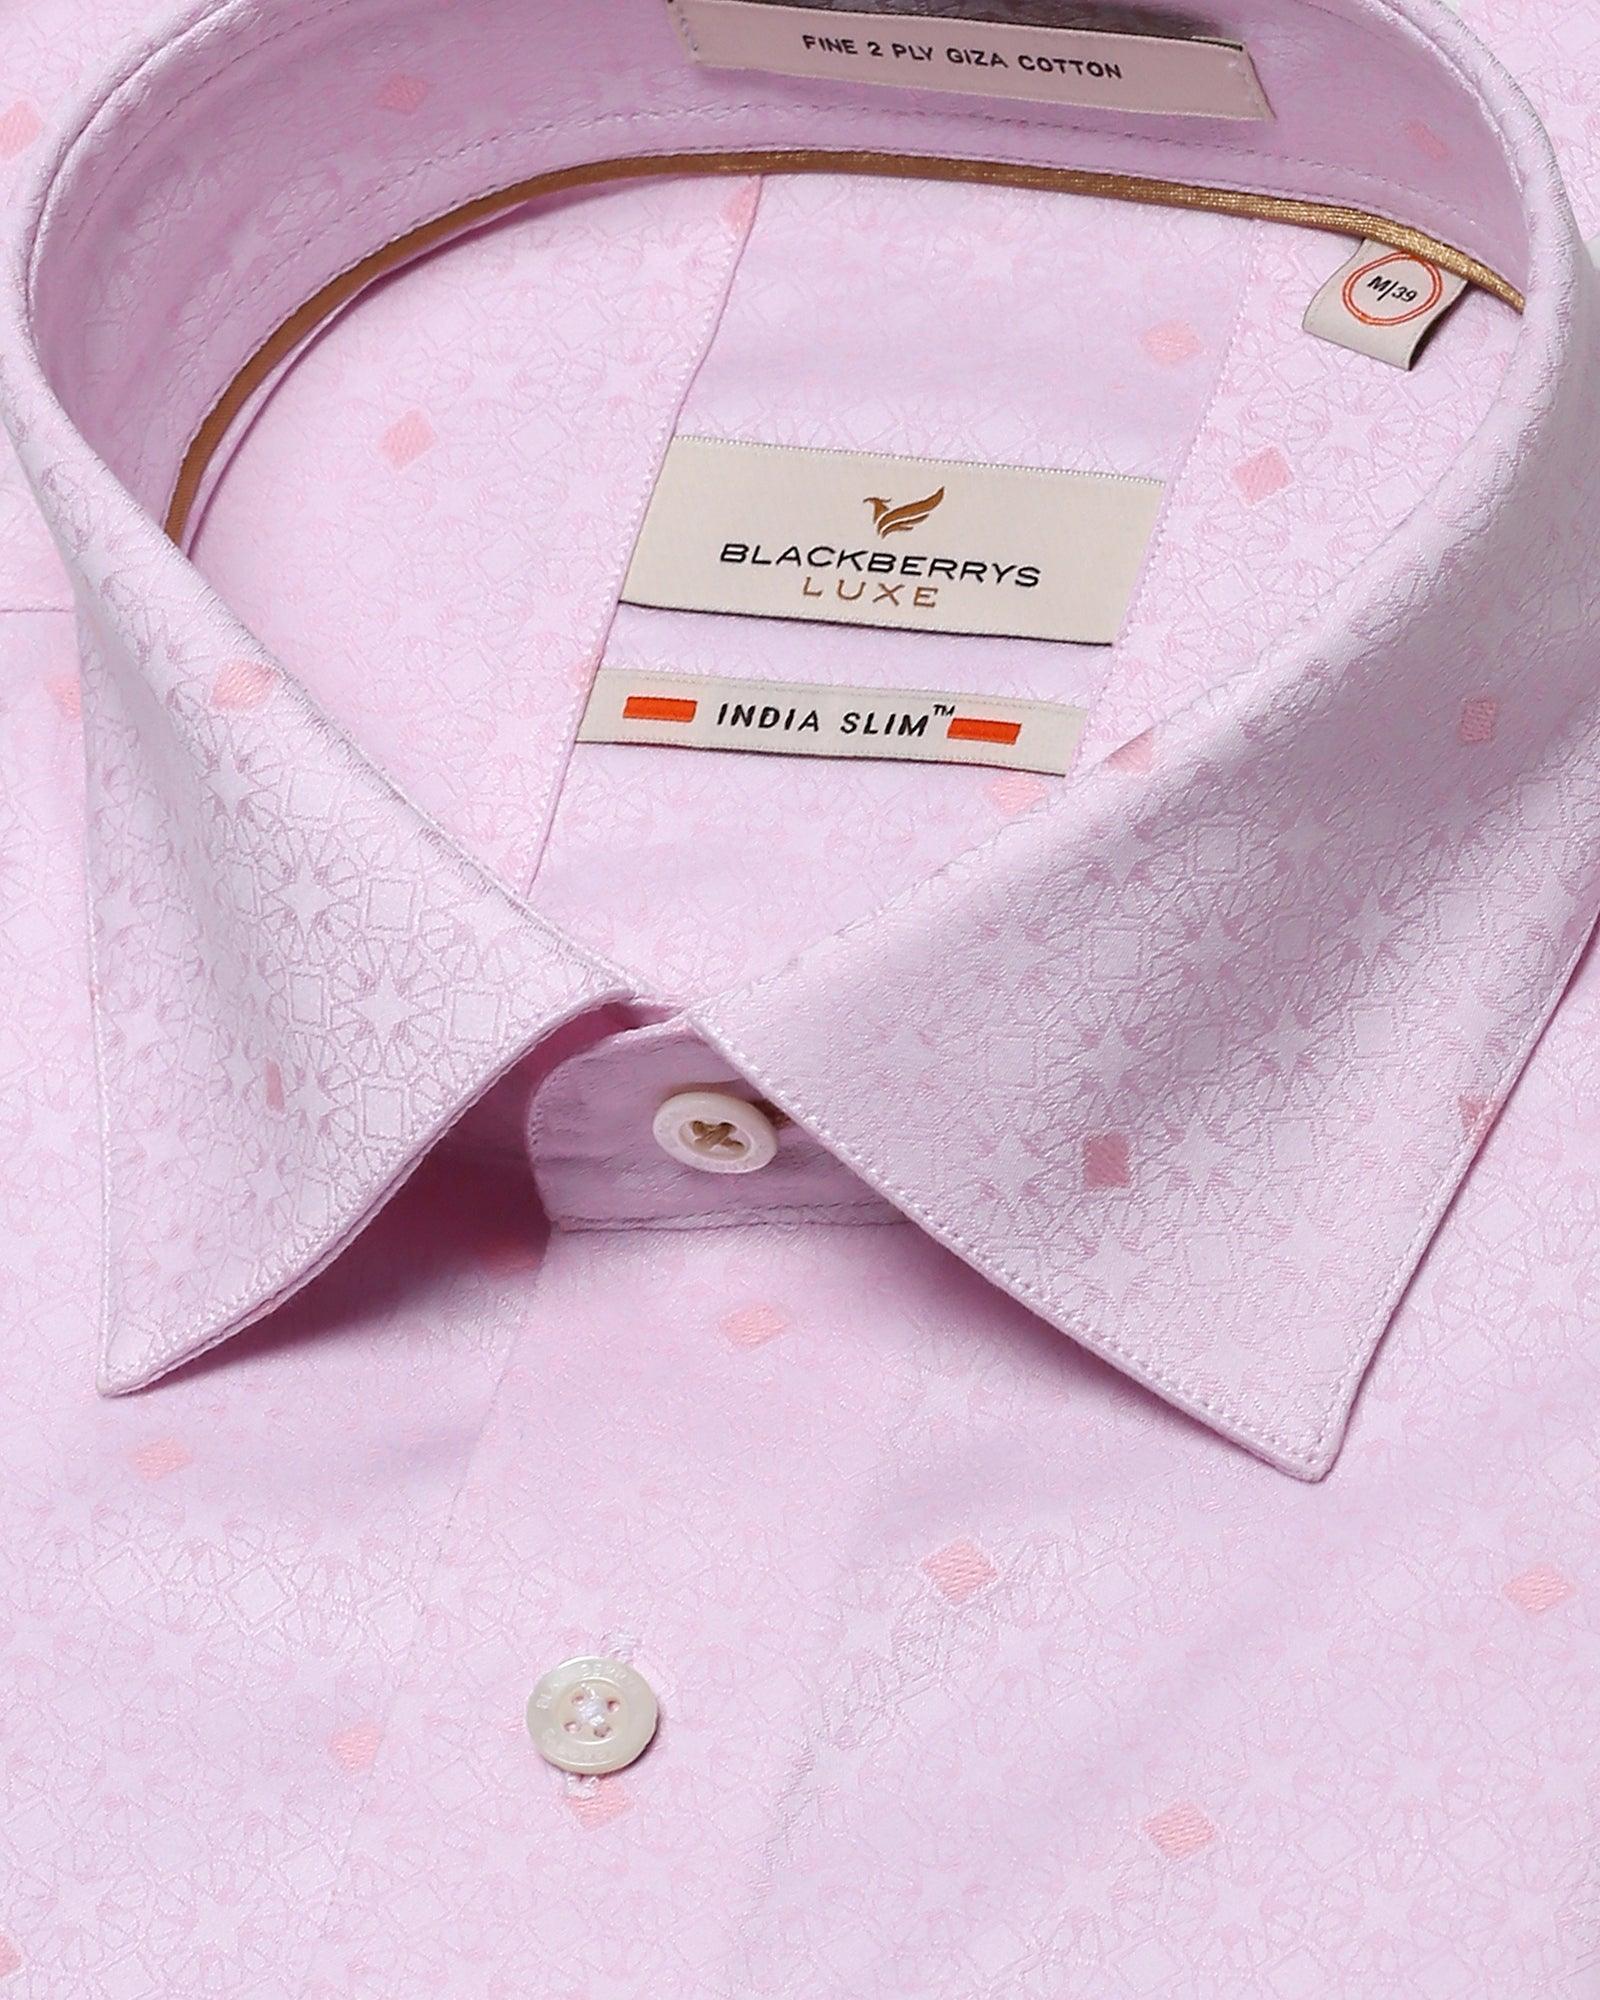 Luxe Formal Pink Printed Shirt - Pride